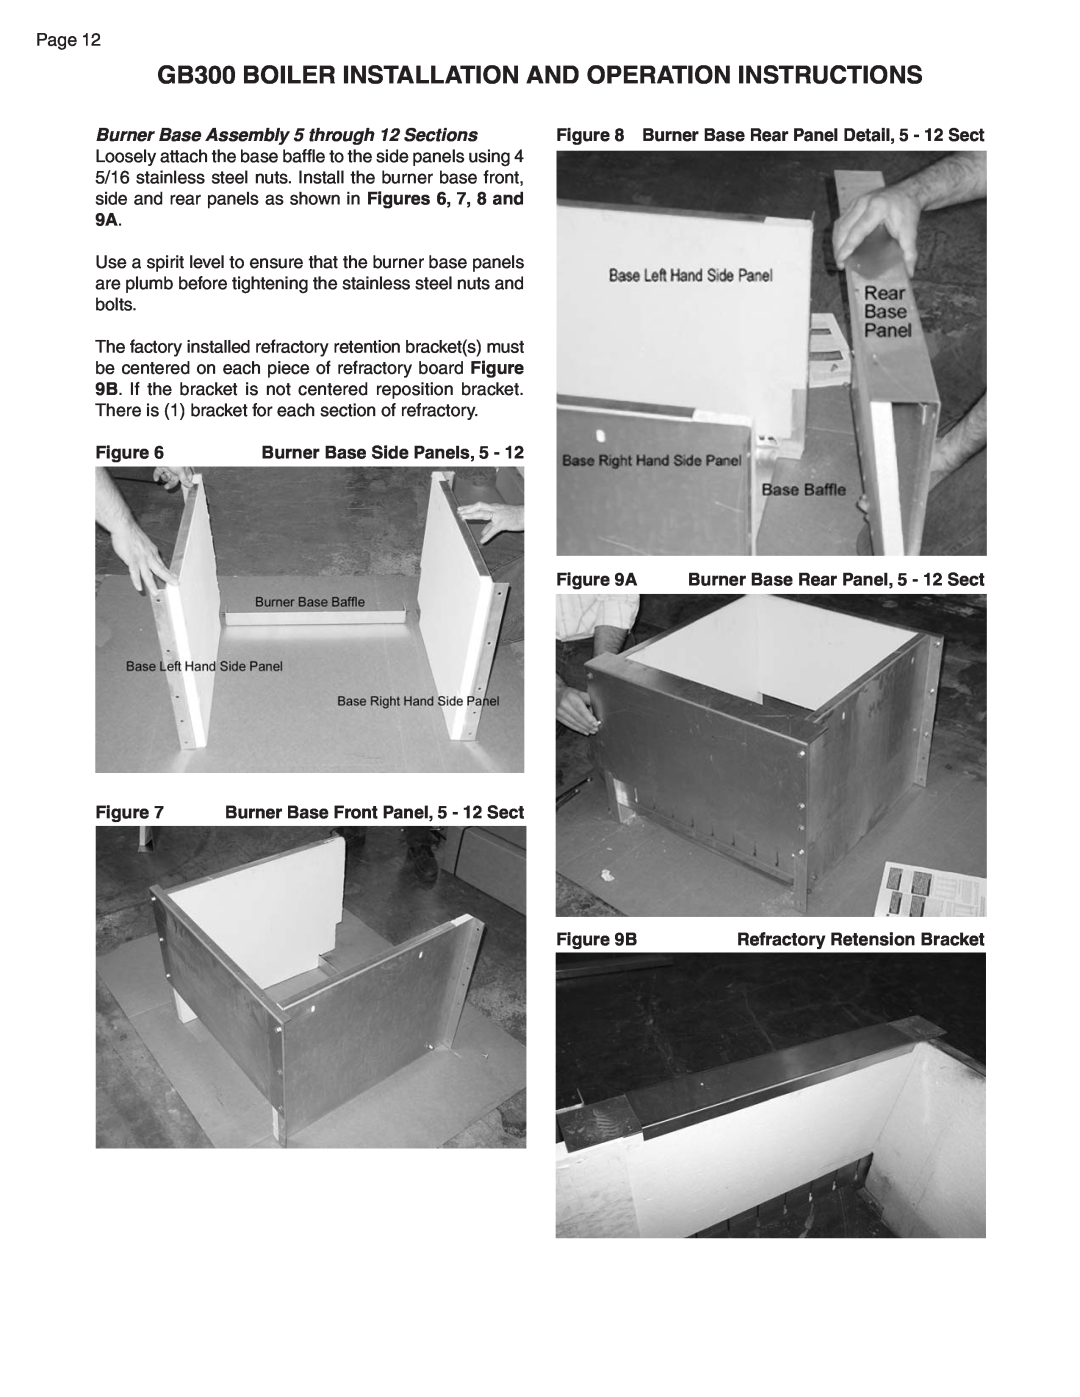 Smith Cast Iron Boilers GB300 warranty Burner Base Assembly 5 through 12 Sections, Figure, Burner Base Side Panels, 5 